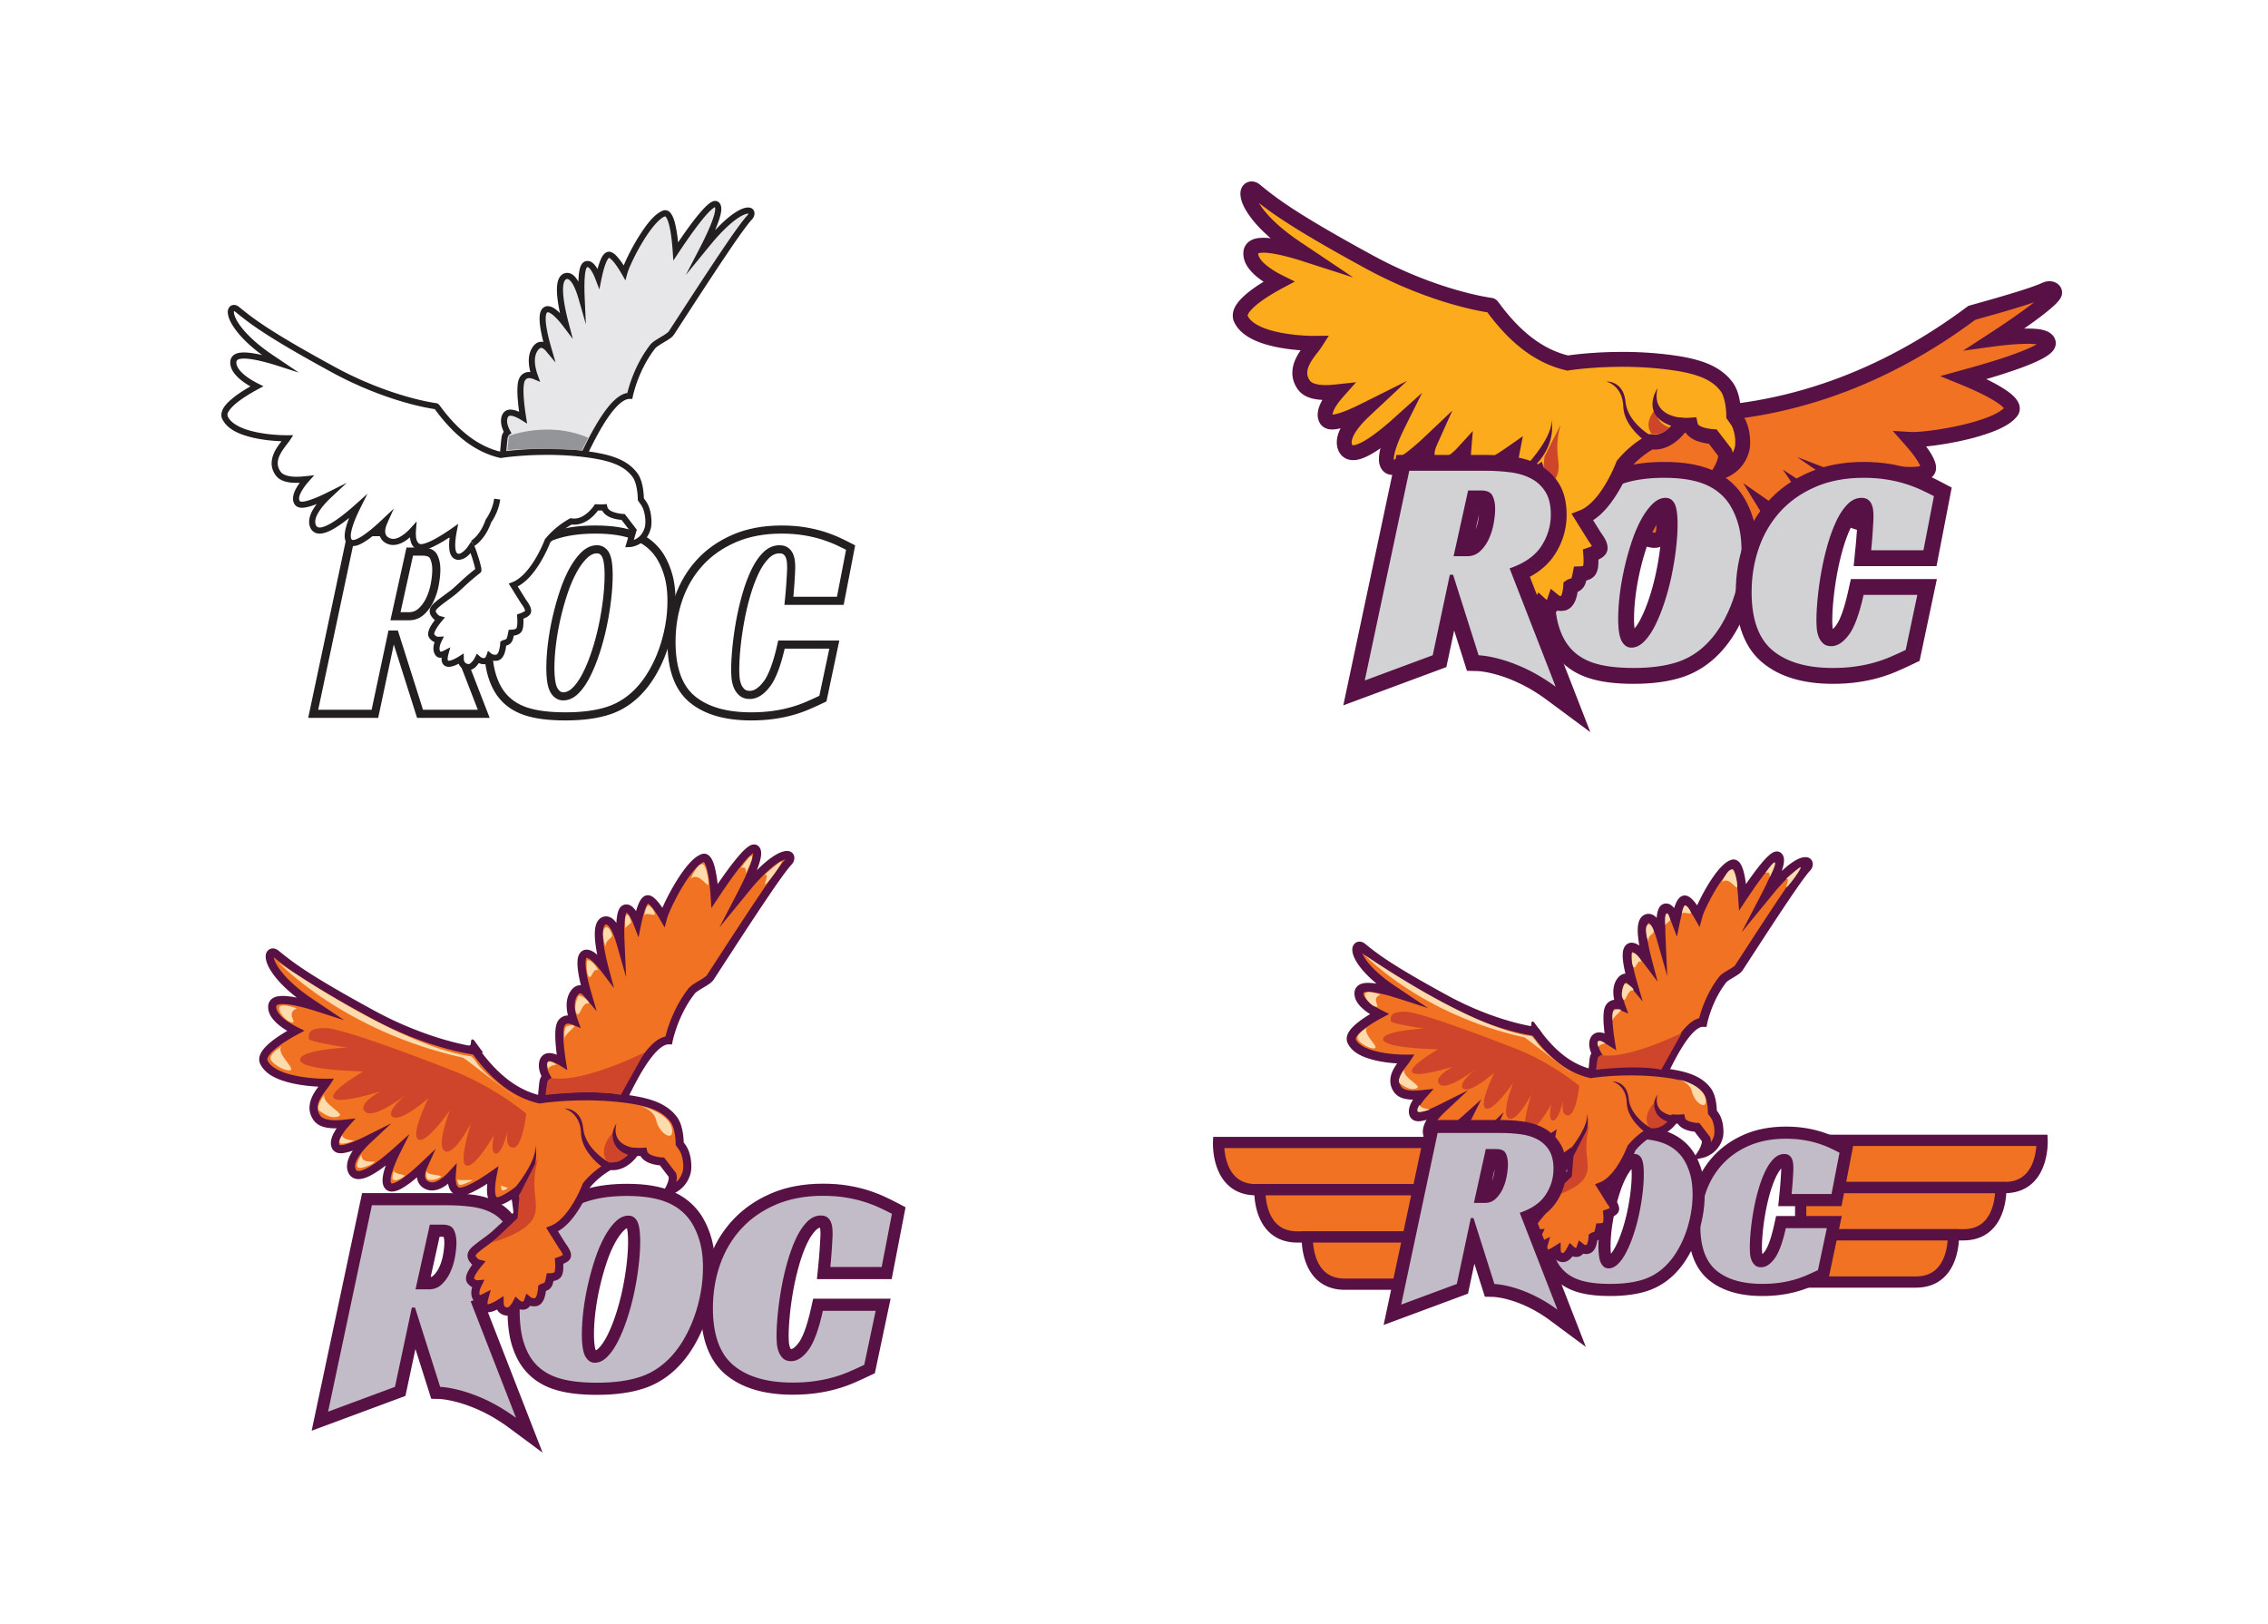 ROC concepts in colour